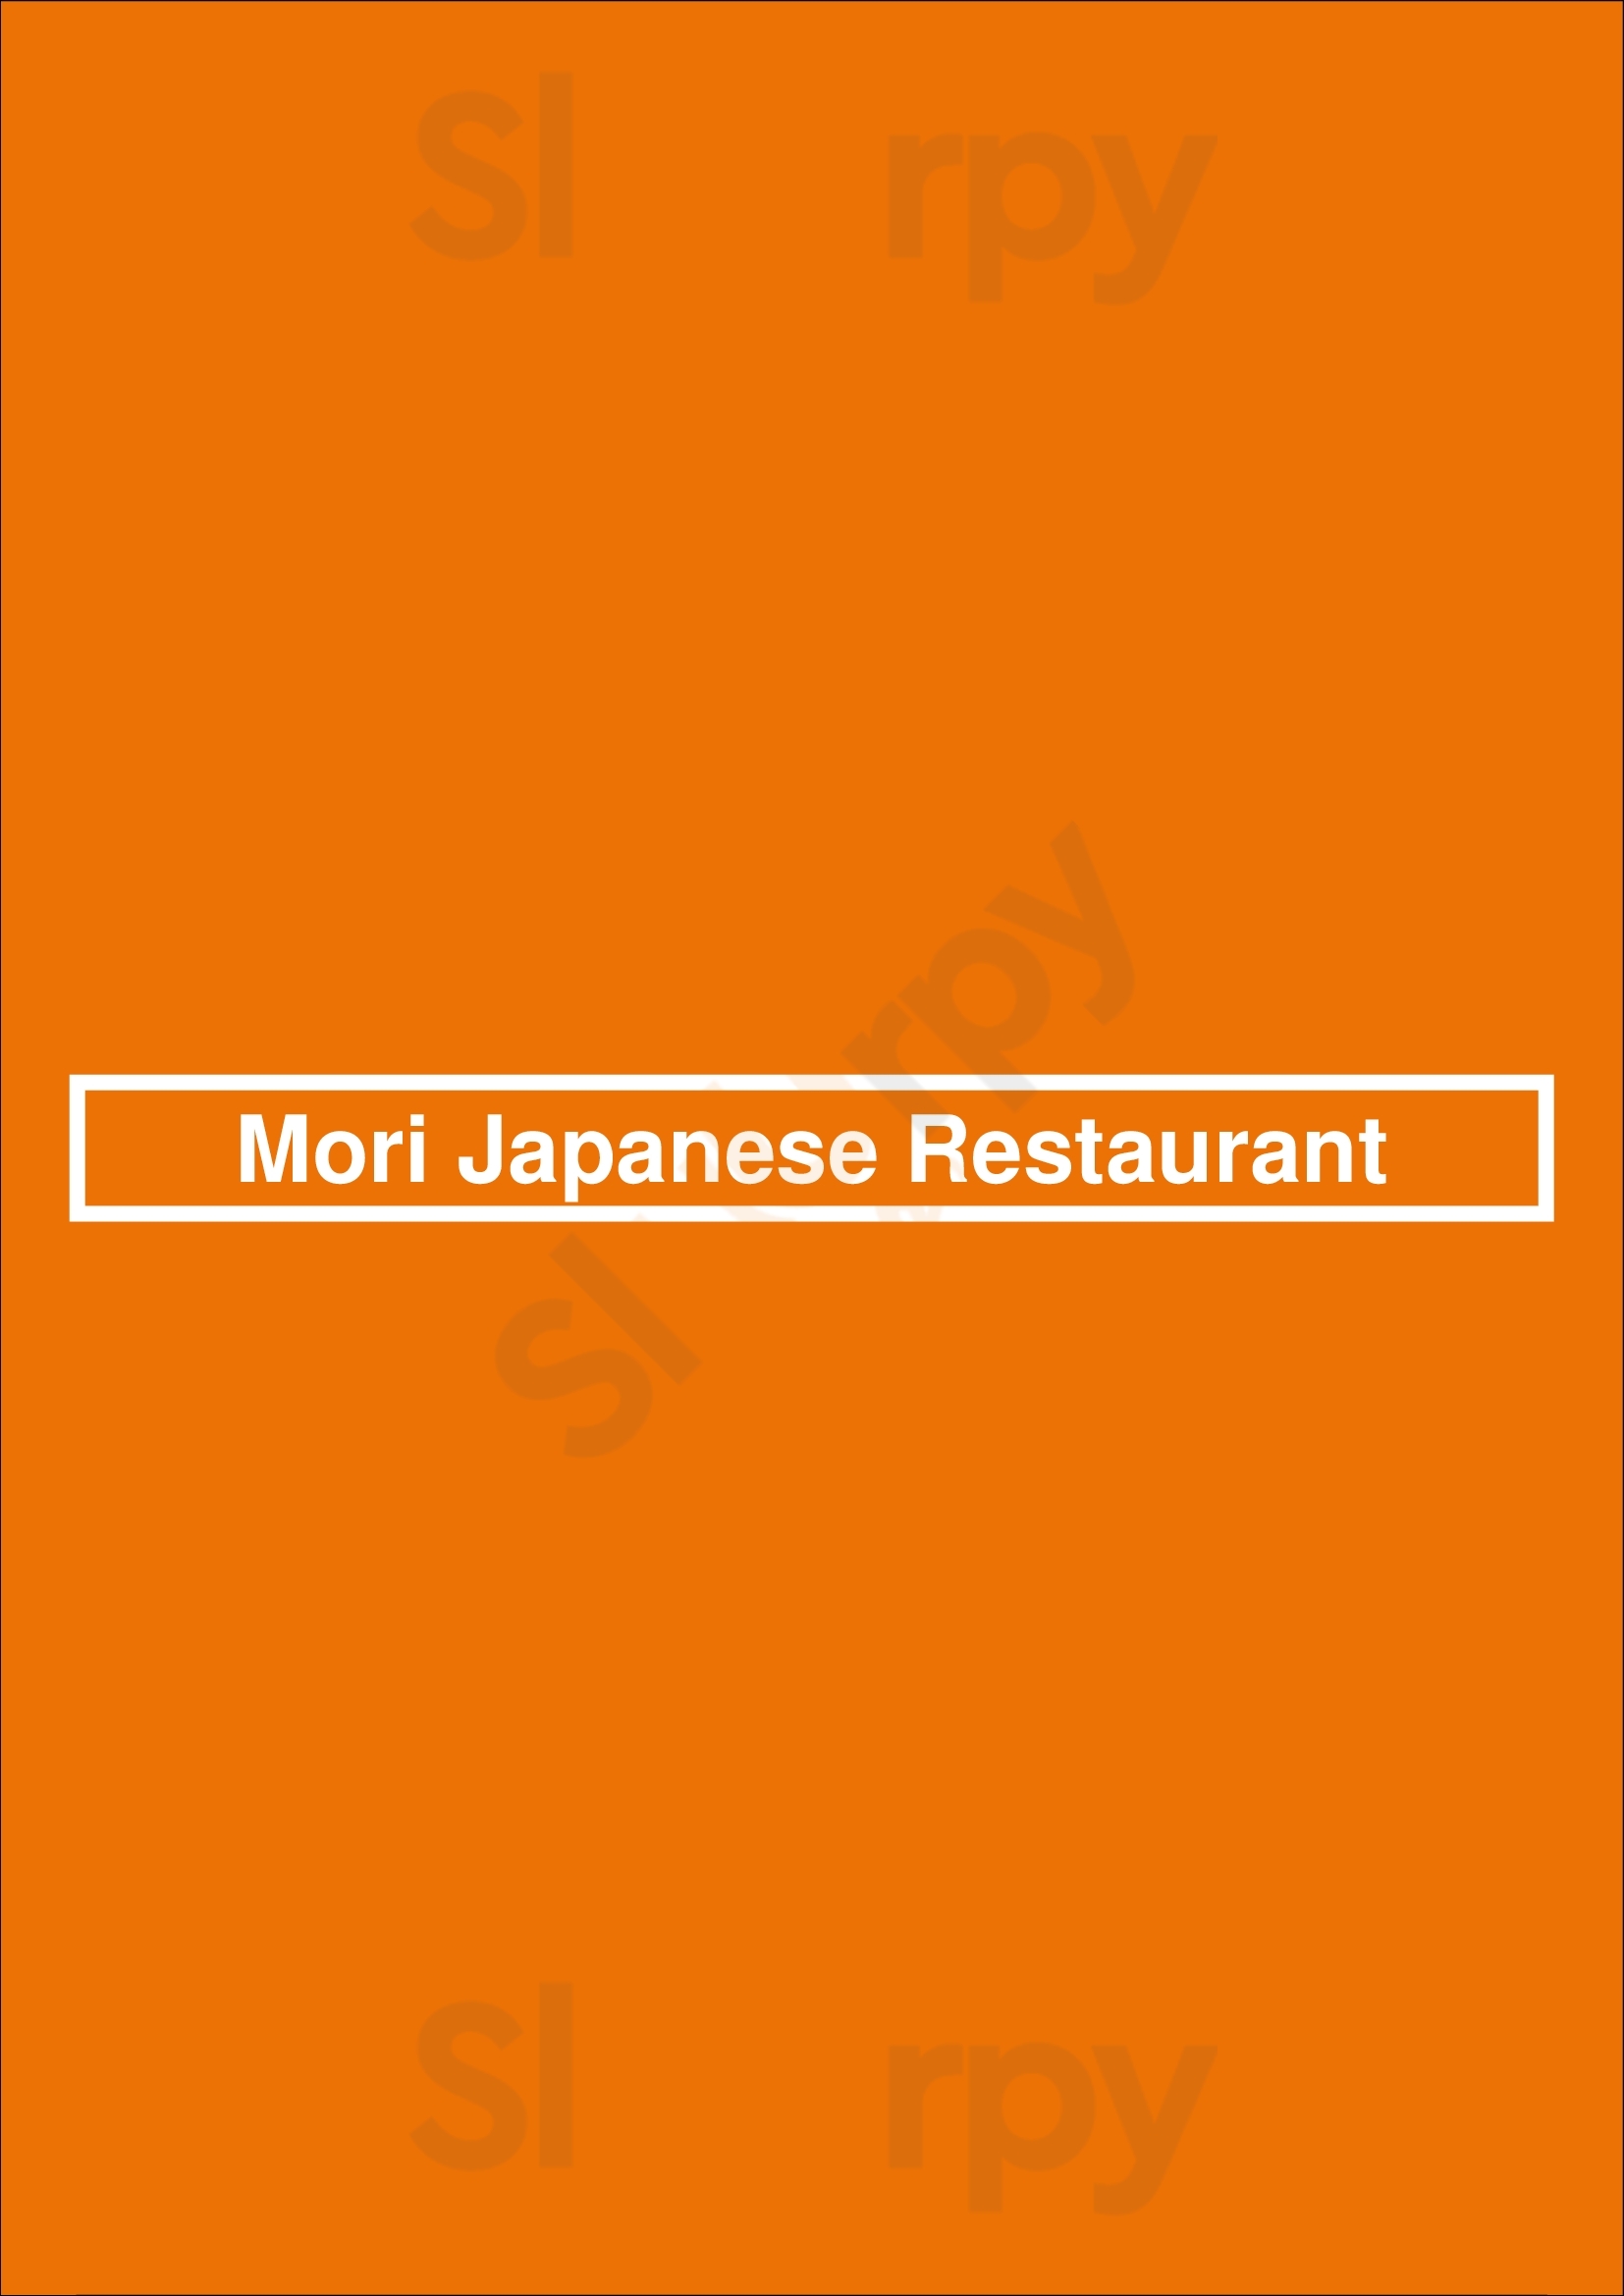 Mori Japanese Restaurant Seattle Menu - 1